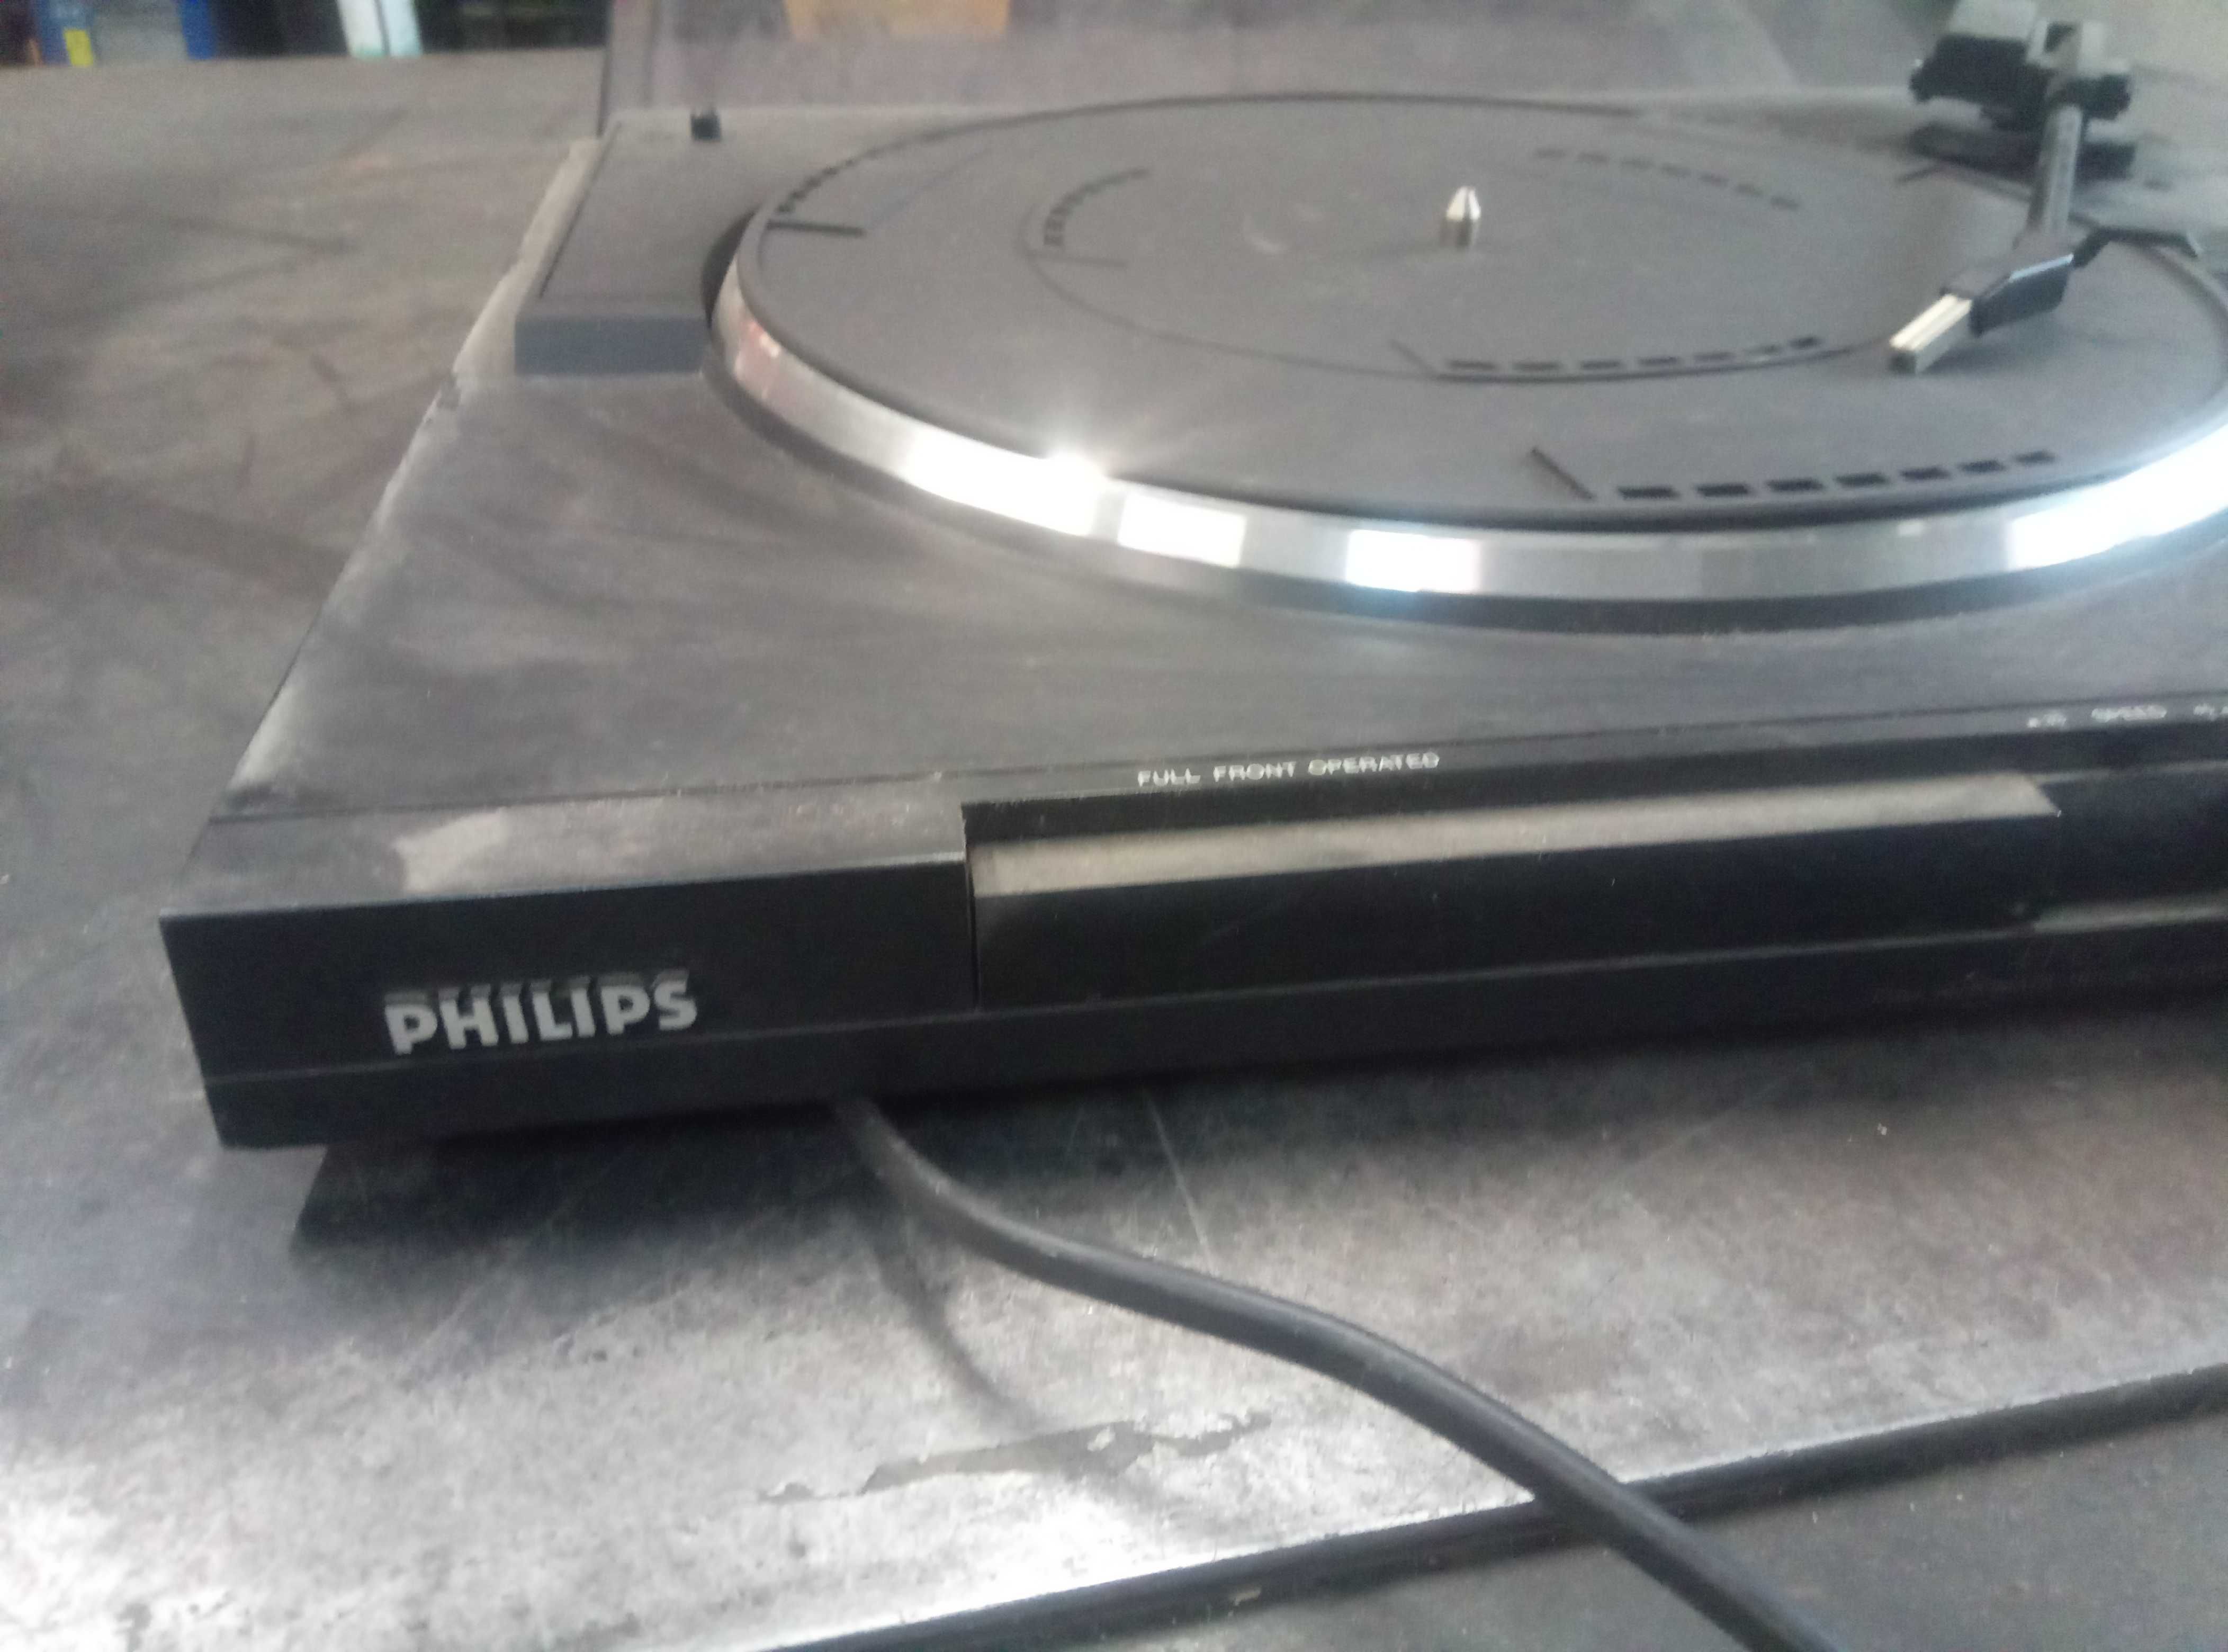 Gramofon adapter Philips 70FP650